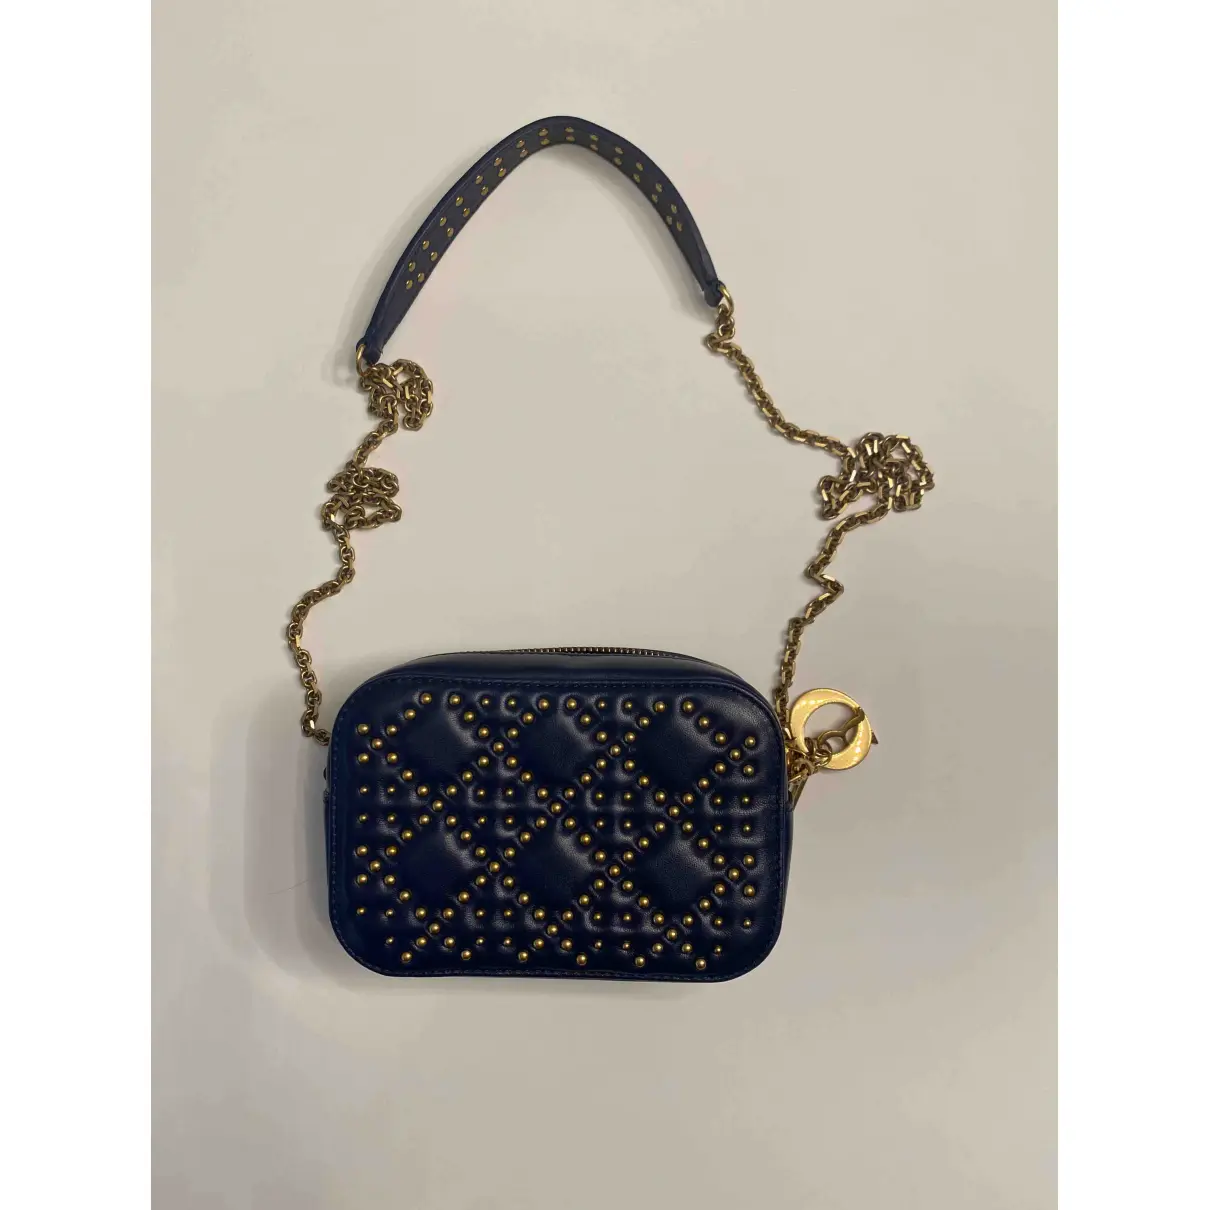 Buy Dior Lady Dior leather clutch bag online